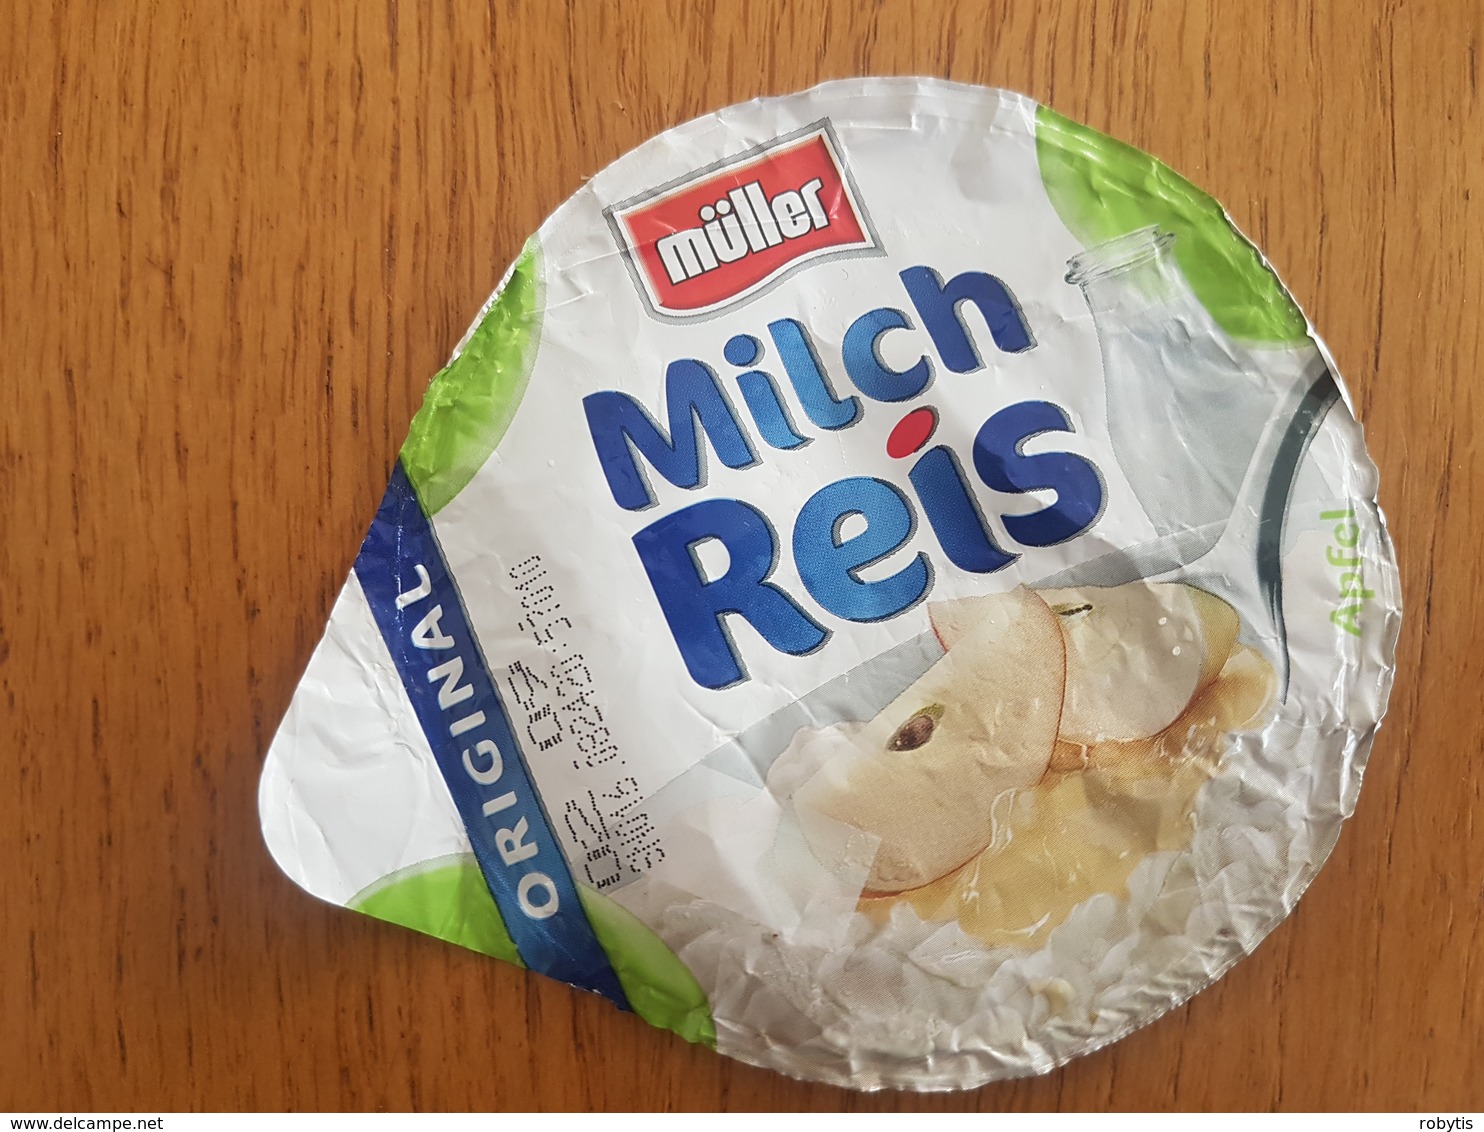 Germany Milch Reis Top - Milk Tops (Milk Lids)